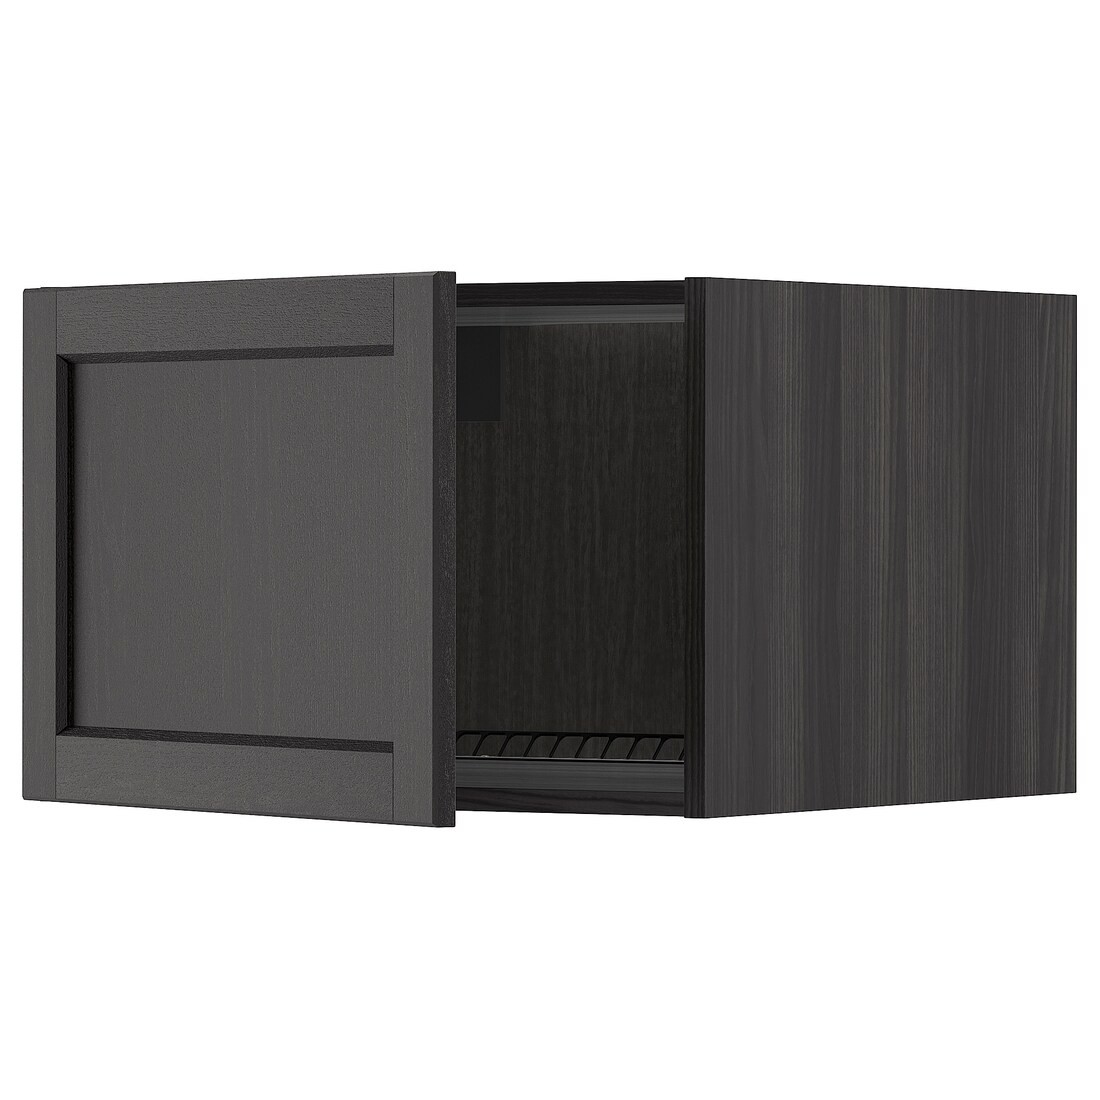 IKEA METOD МЕТОД Верхний шкаф для холодильника / морозильника, черный / Lerhyttan черная морилка, 60x40 см 29467314 | 294.673.14